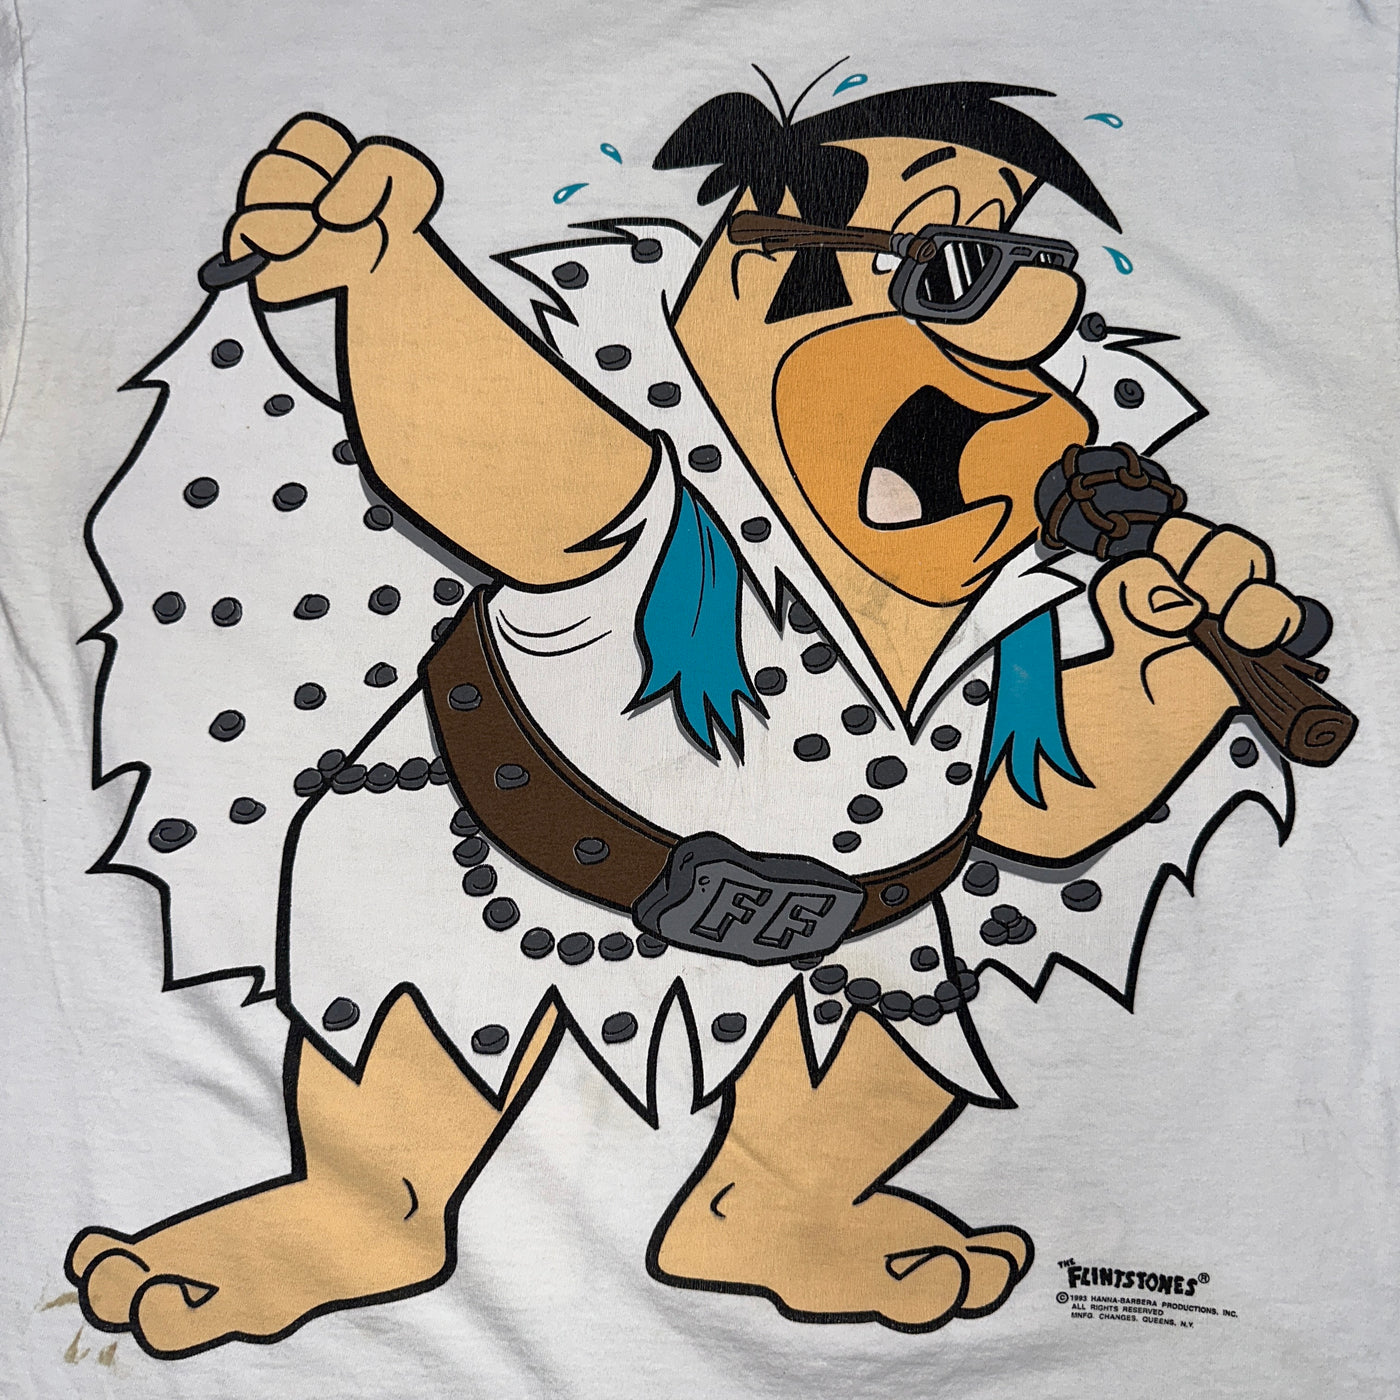 '93 The Flintstones "The King of Bedrock & Roll" T-shirt sz XL